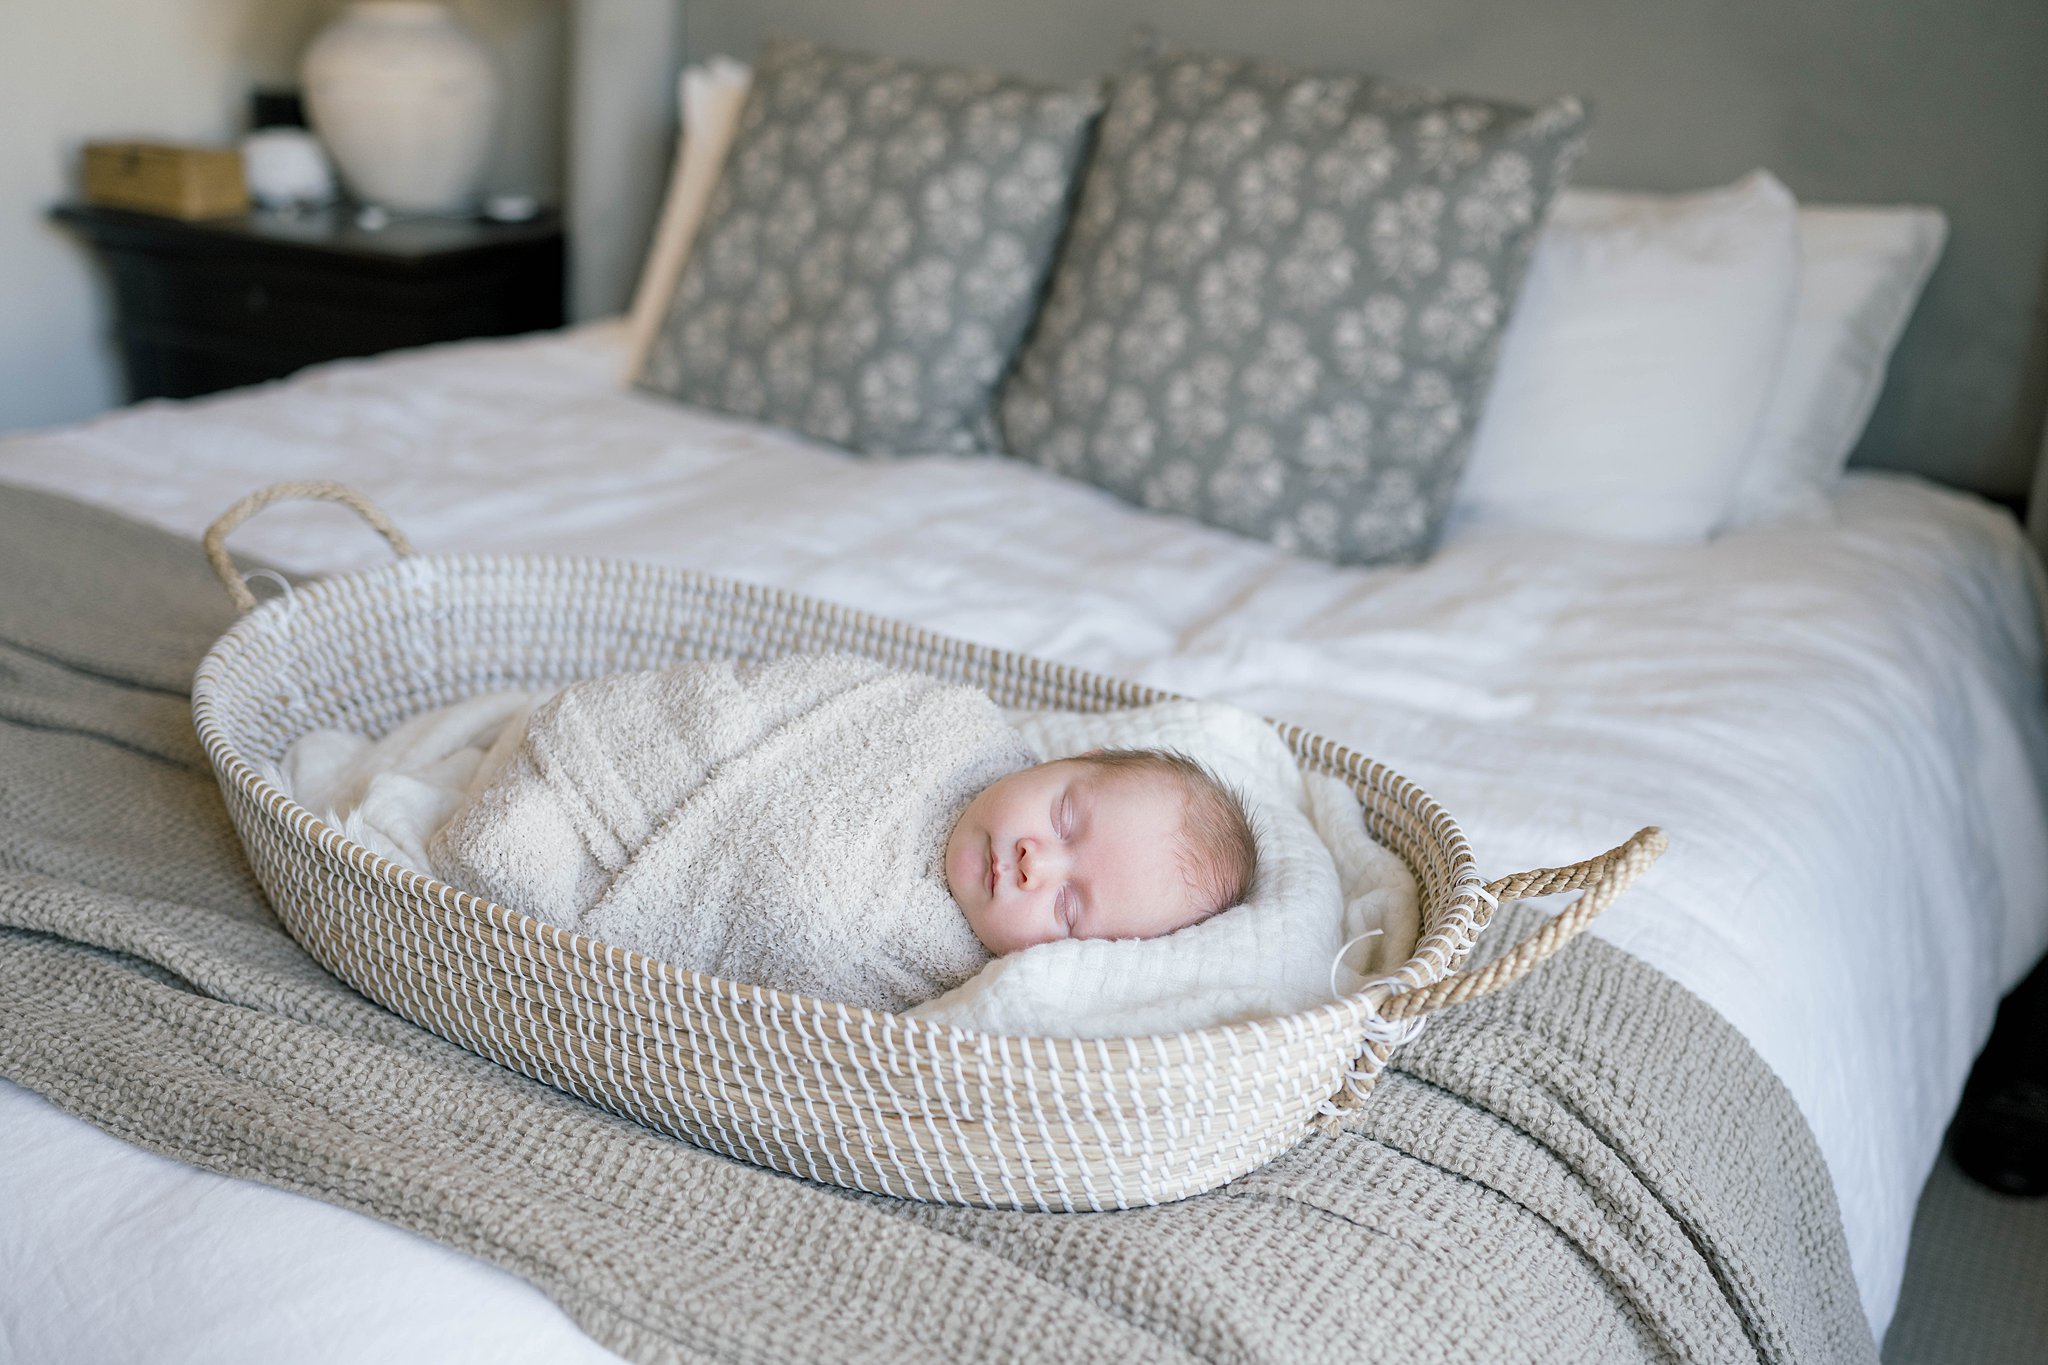 A newborn baby swaddled in a beige blanket sleeps in a long basket on a bed